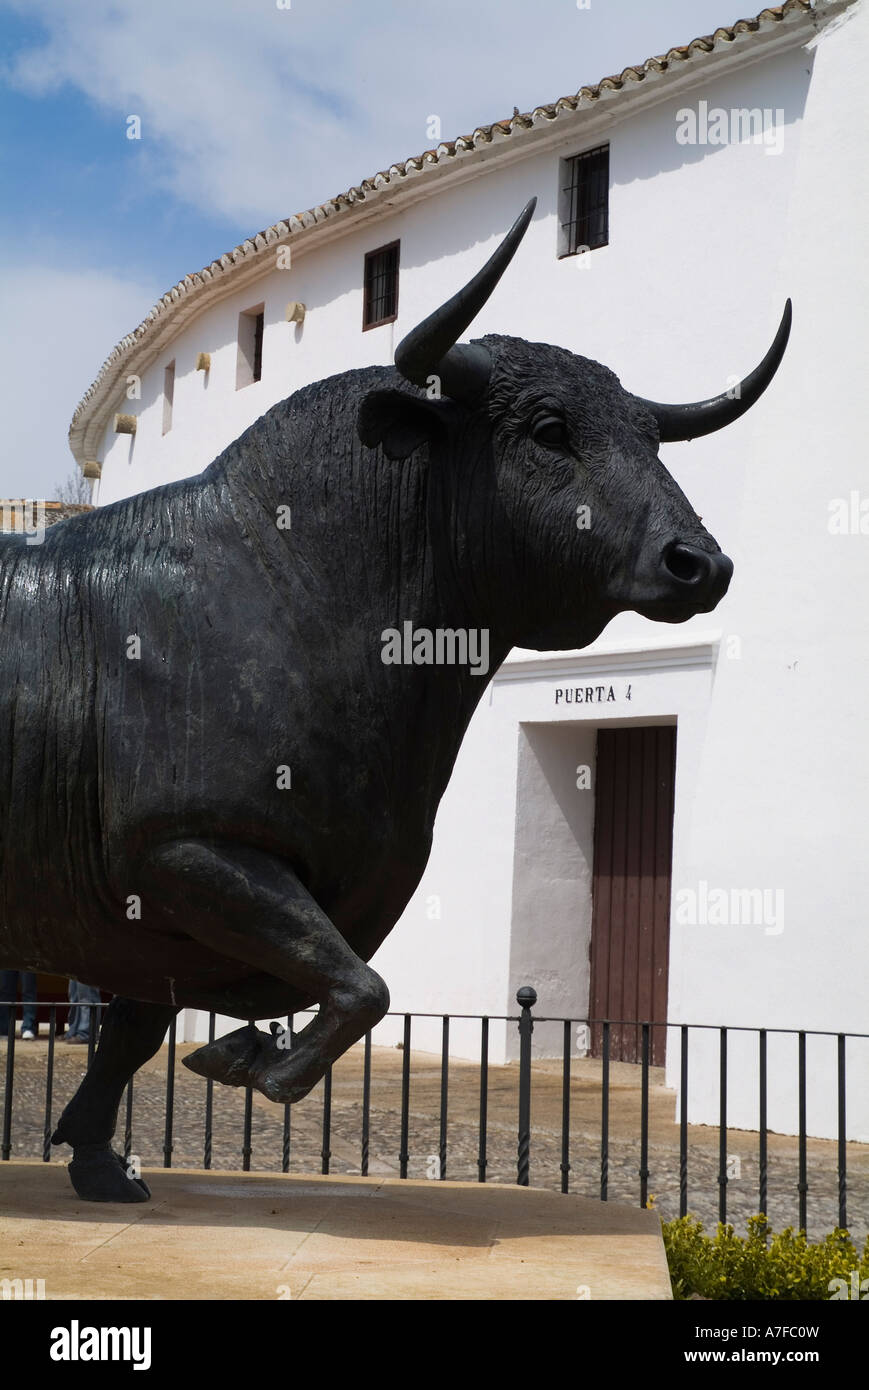 Plaza de Toros de Ronda dh España estatua de Bull fuera del estadio taurino Foto de stock